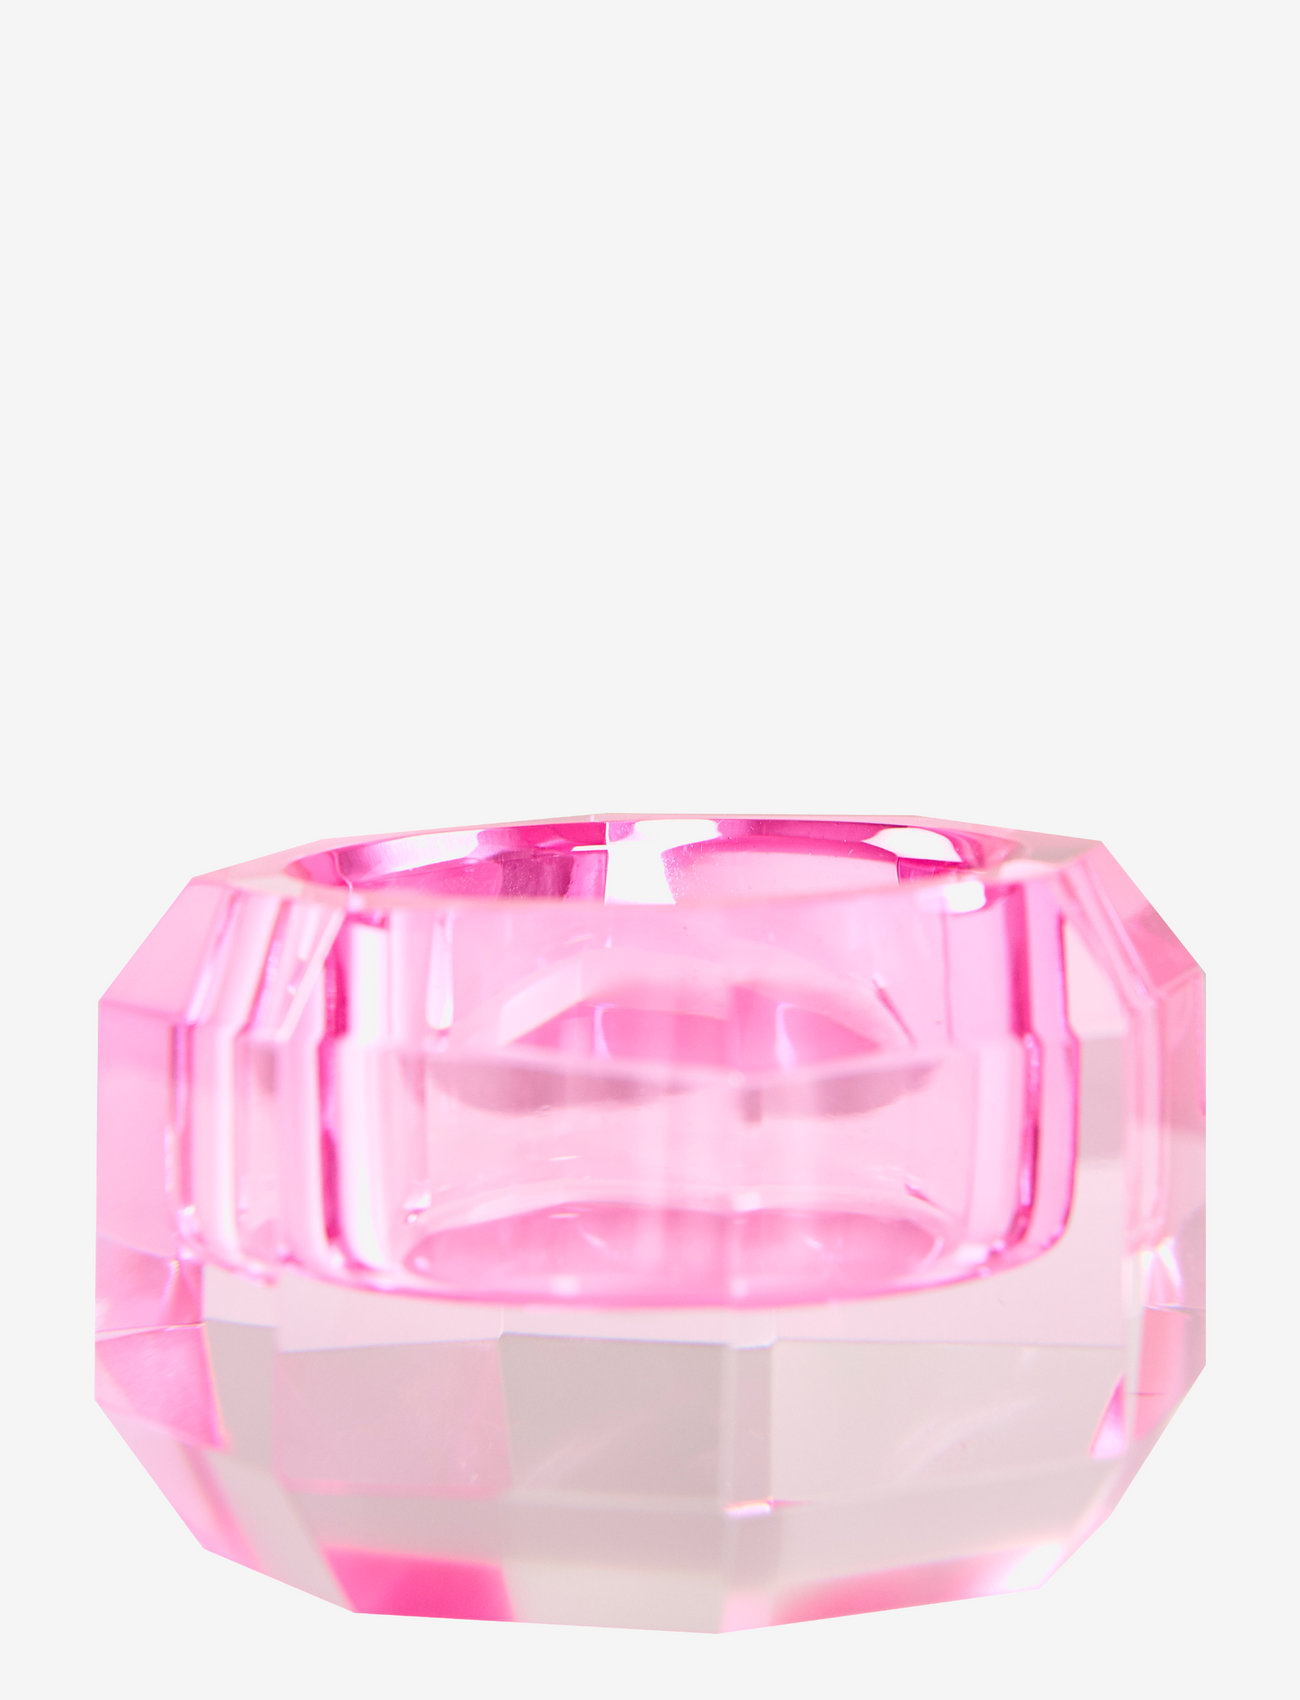 C'est Bon - Crystal candle holder - lowest prices - pink - 0